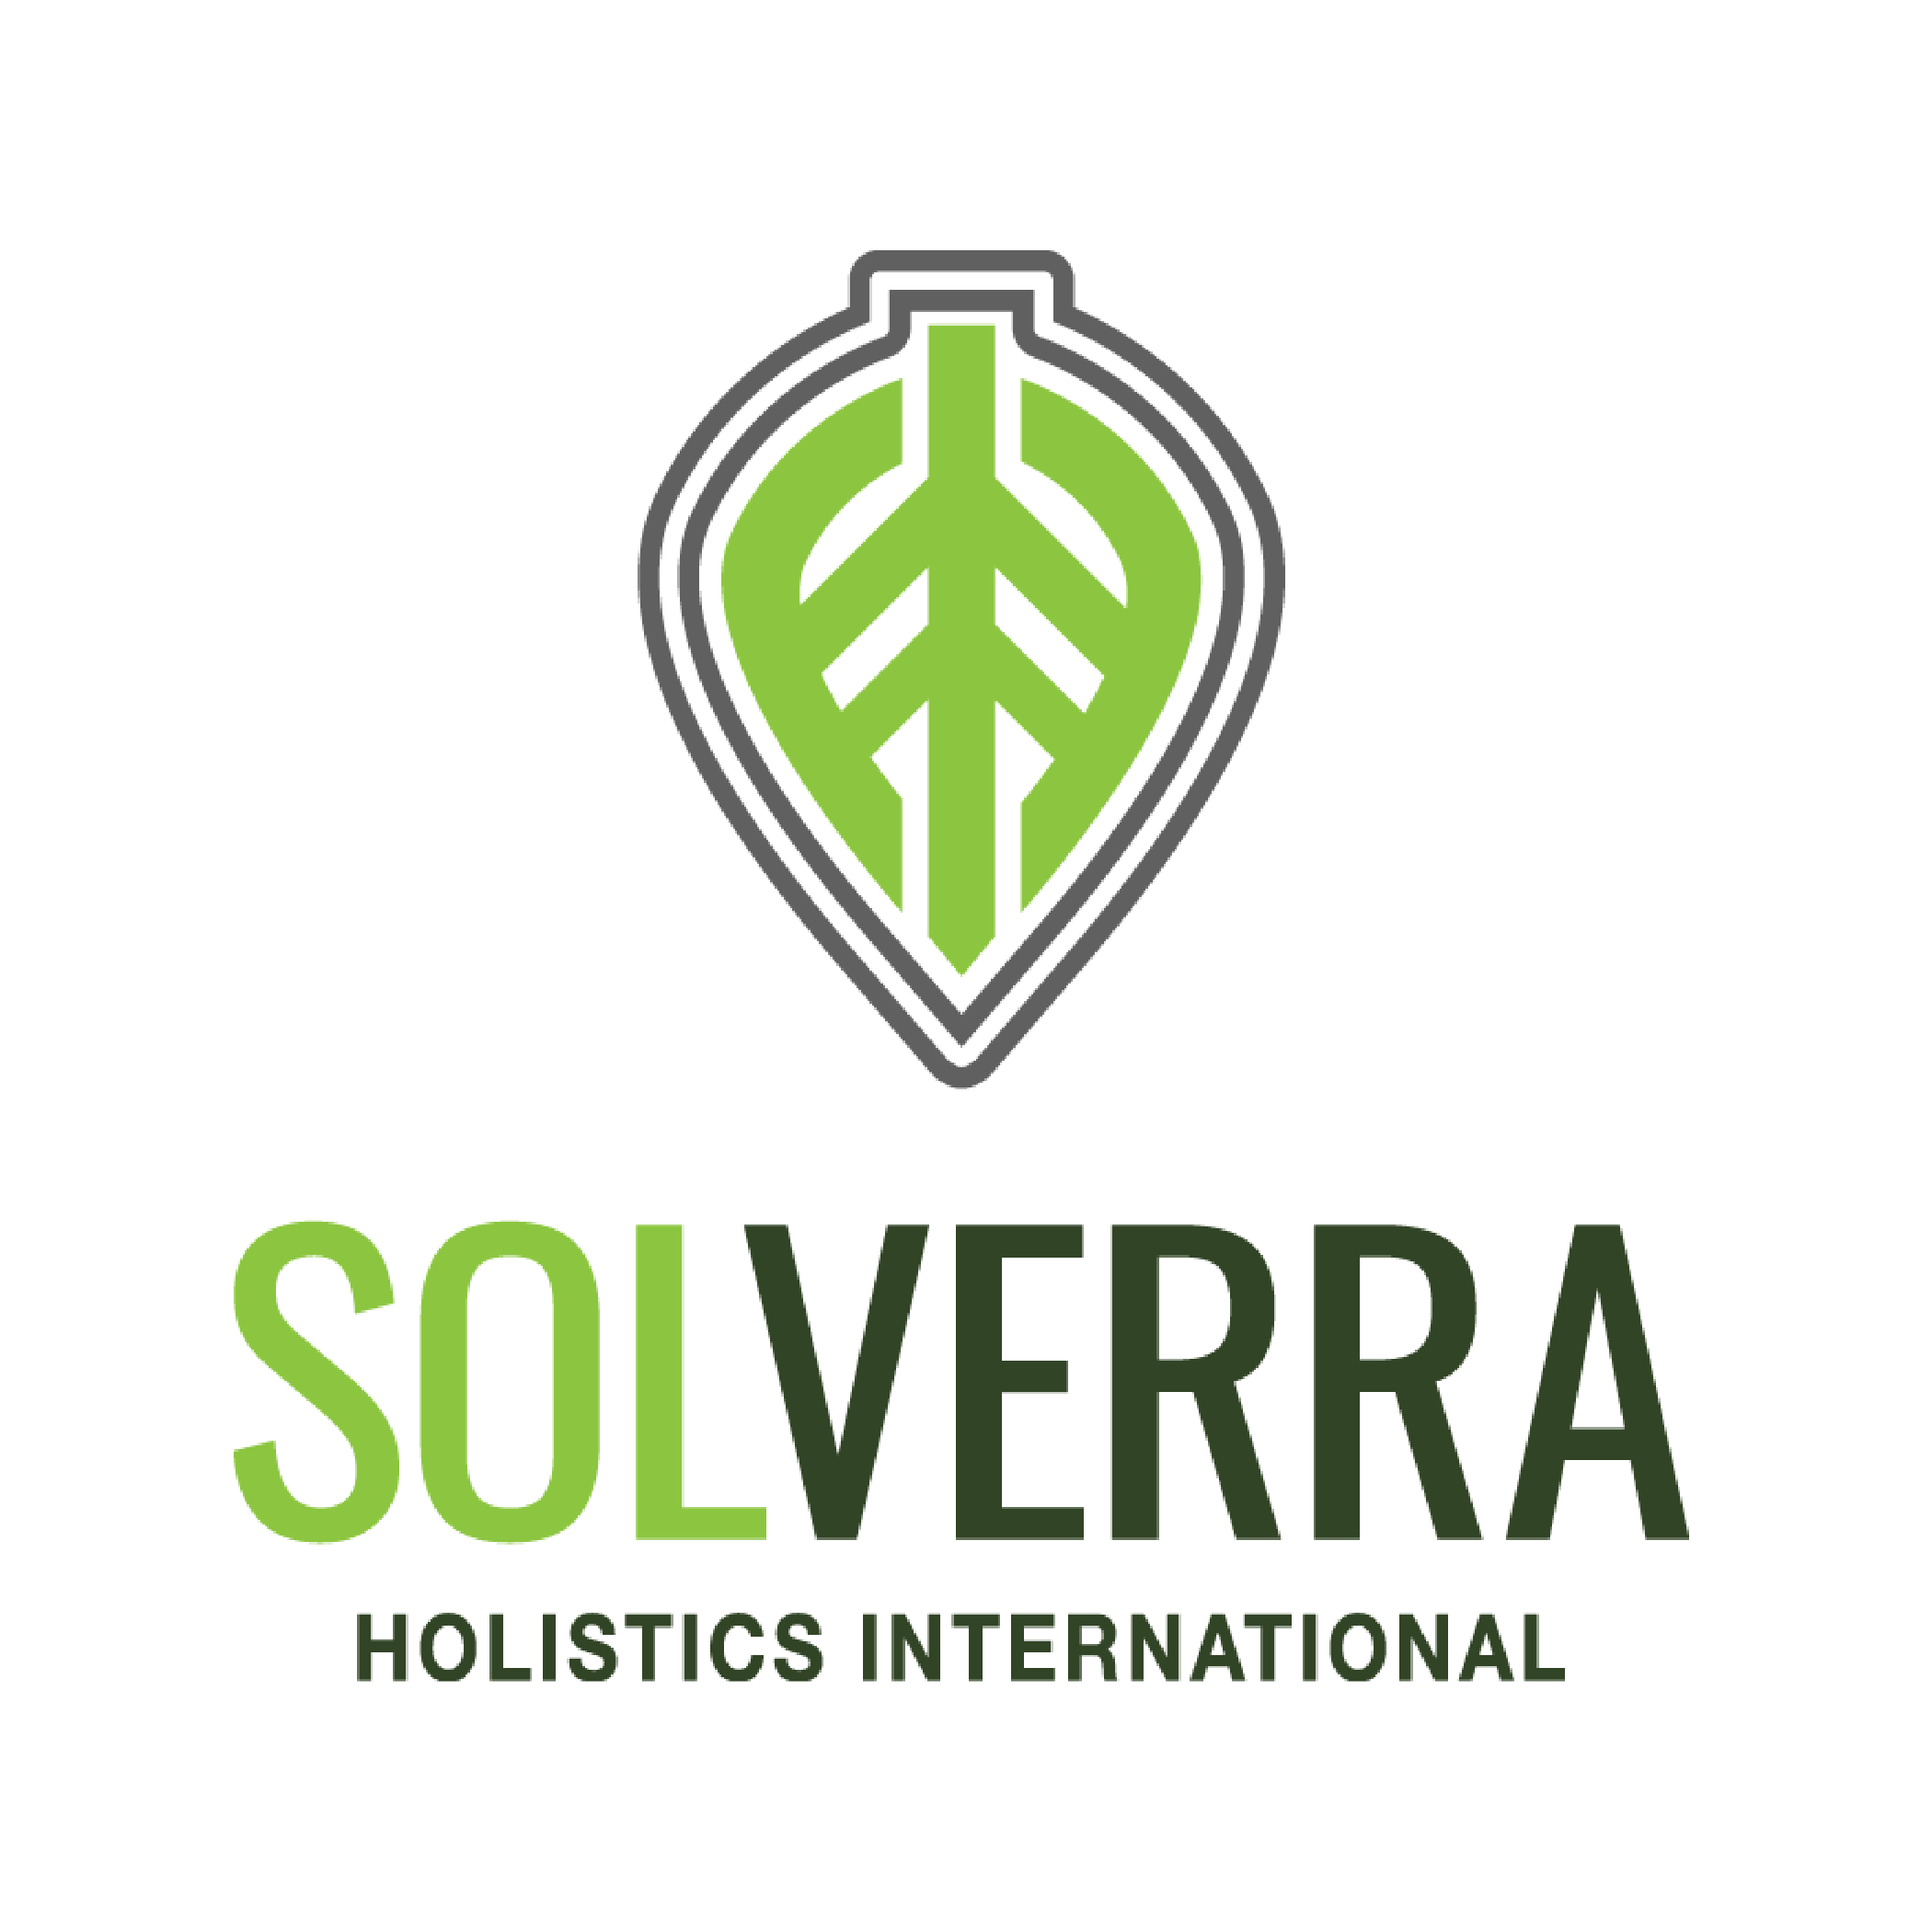 Solverra Holistics International